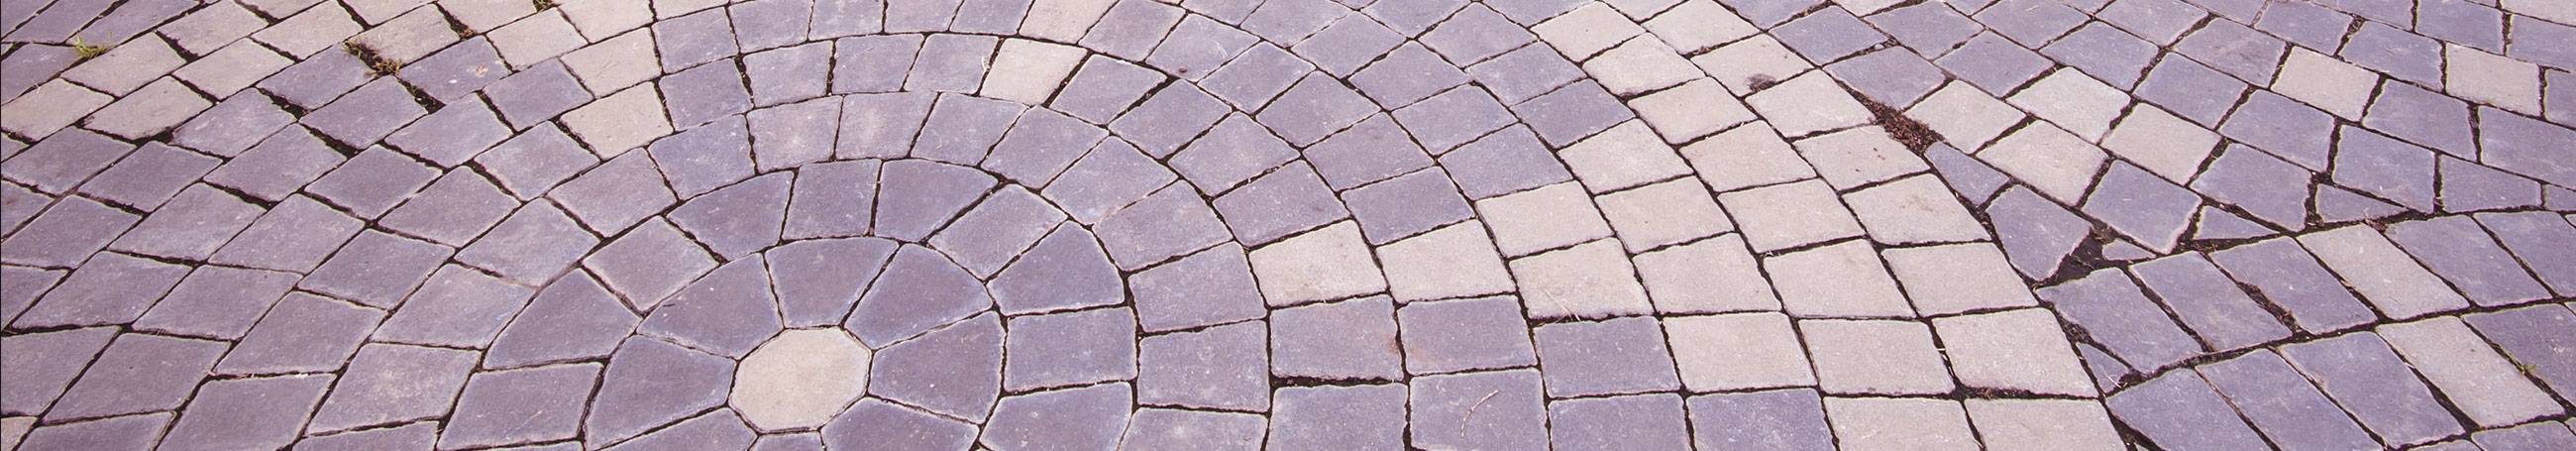 patterned block paving